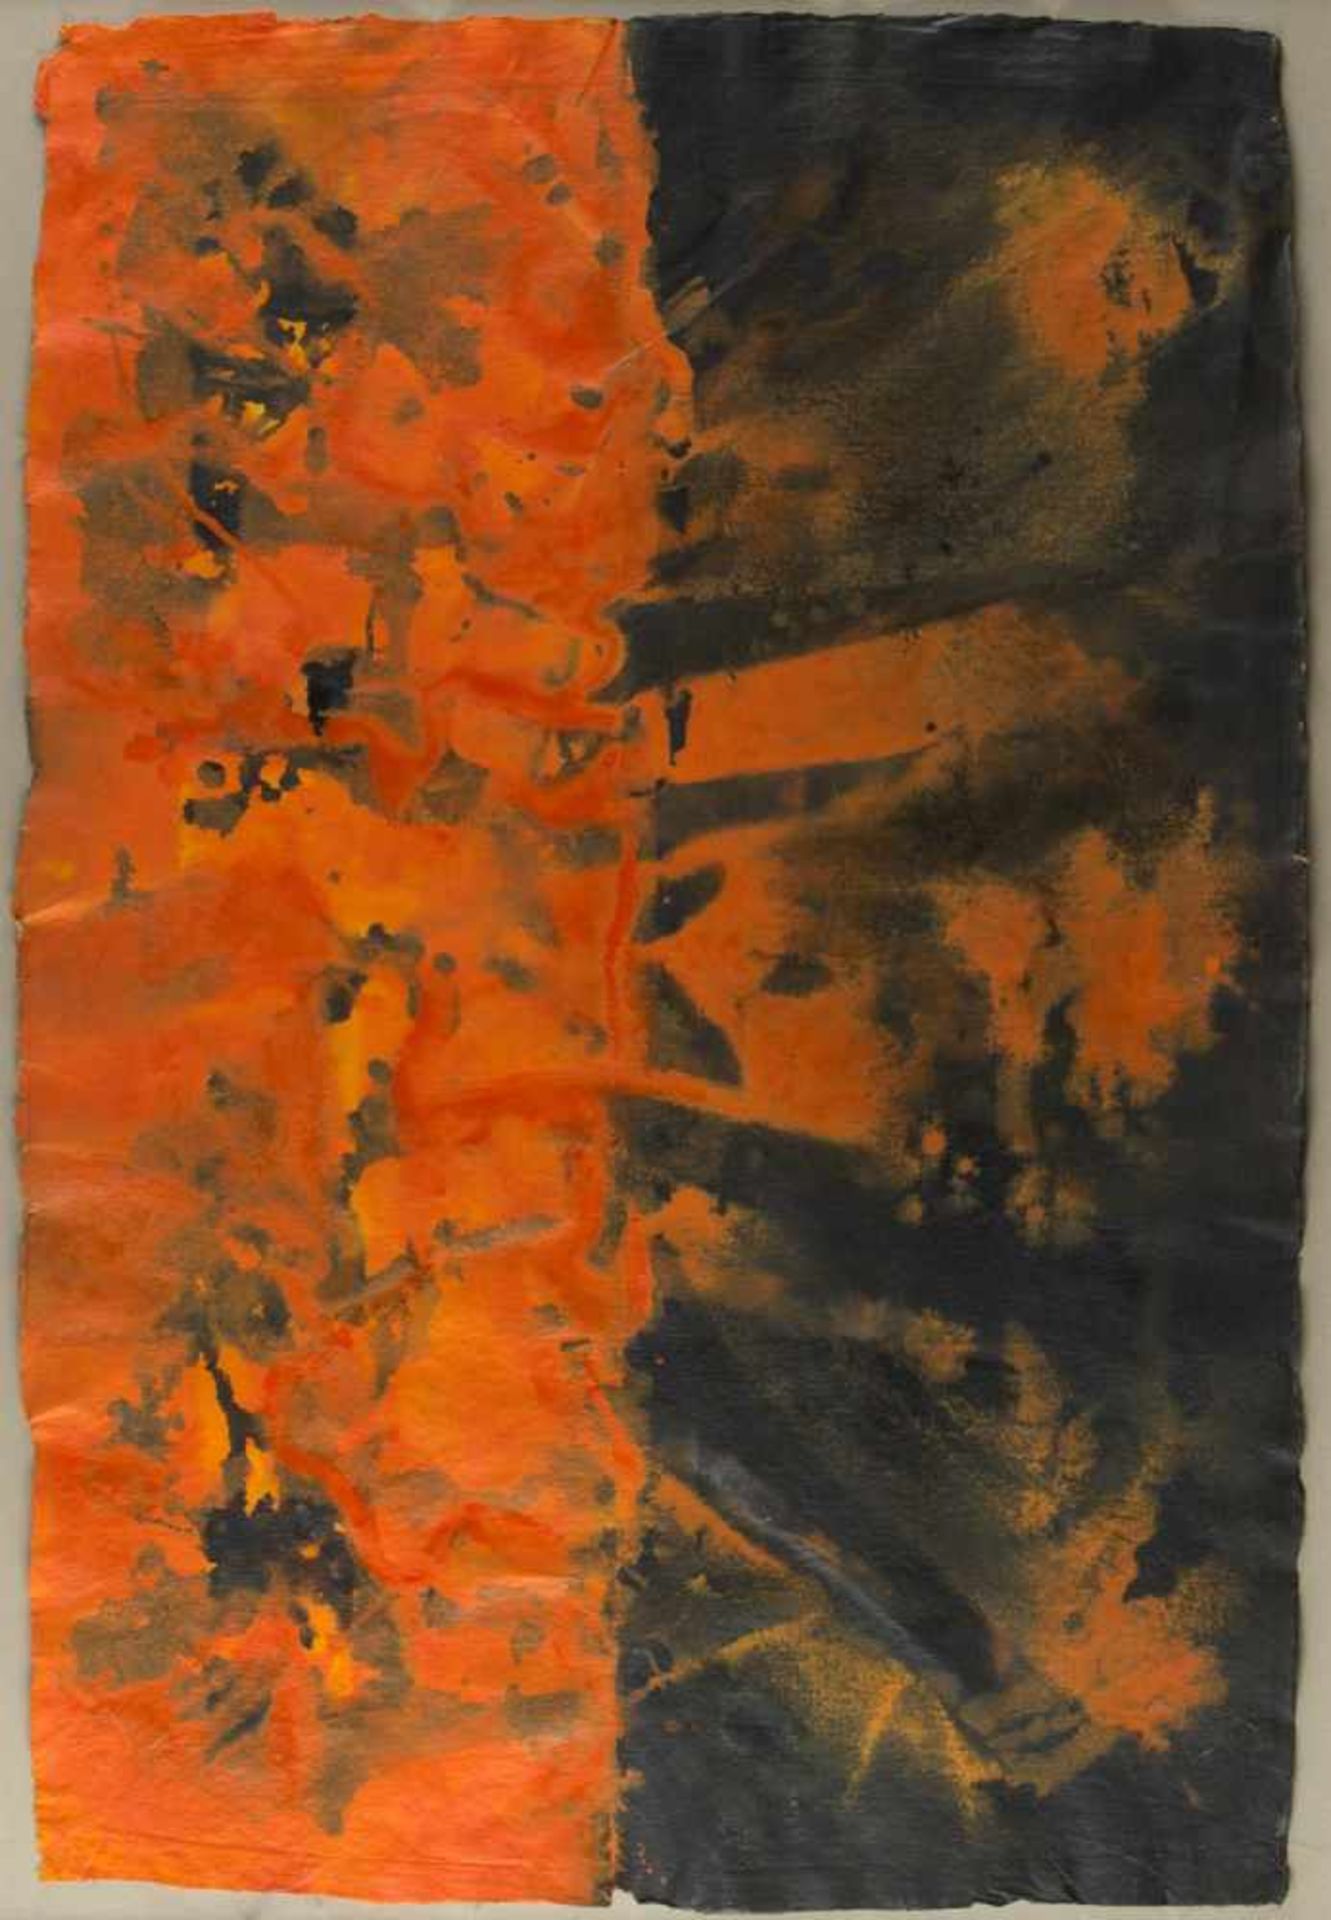 Kausel, Thomas P. 1937 Berlin584 Orange-Schwarz. Acryl/Bütten. 105 x 72 cm. Verso auf dem